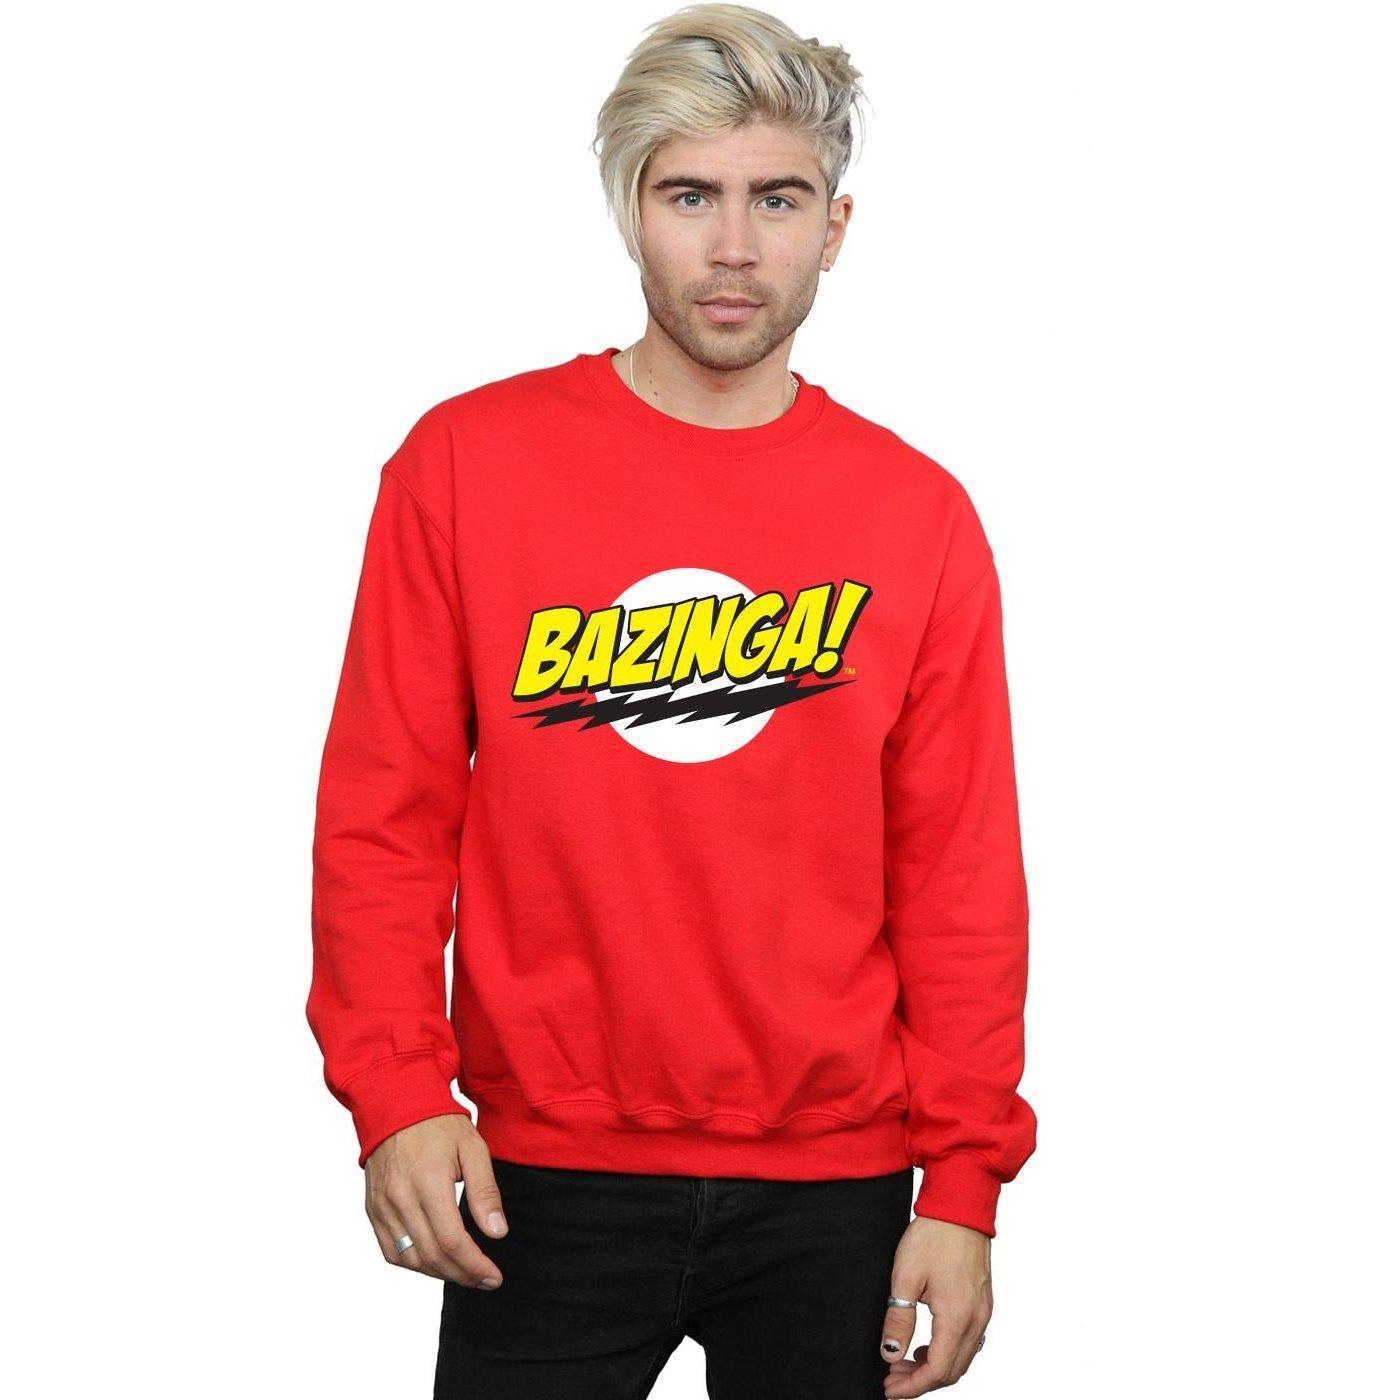 The Big Bang Theory  Bazinga Sweatshirt 